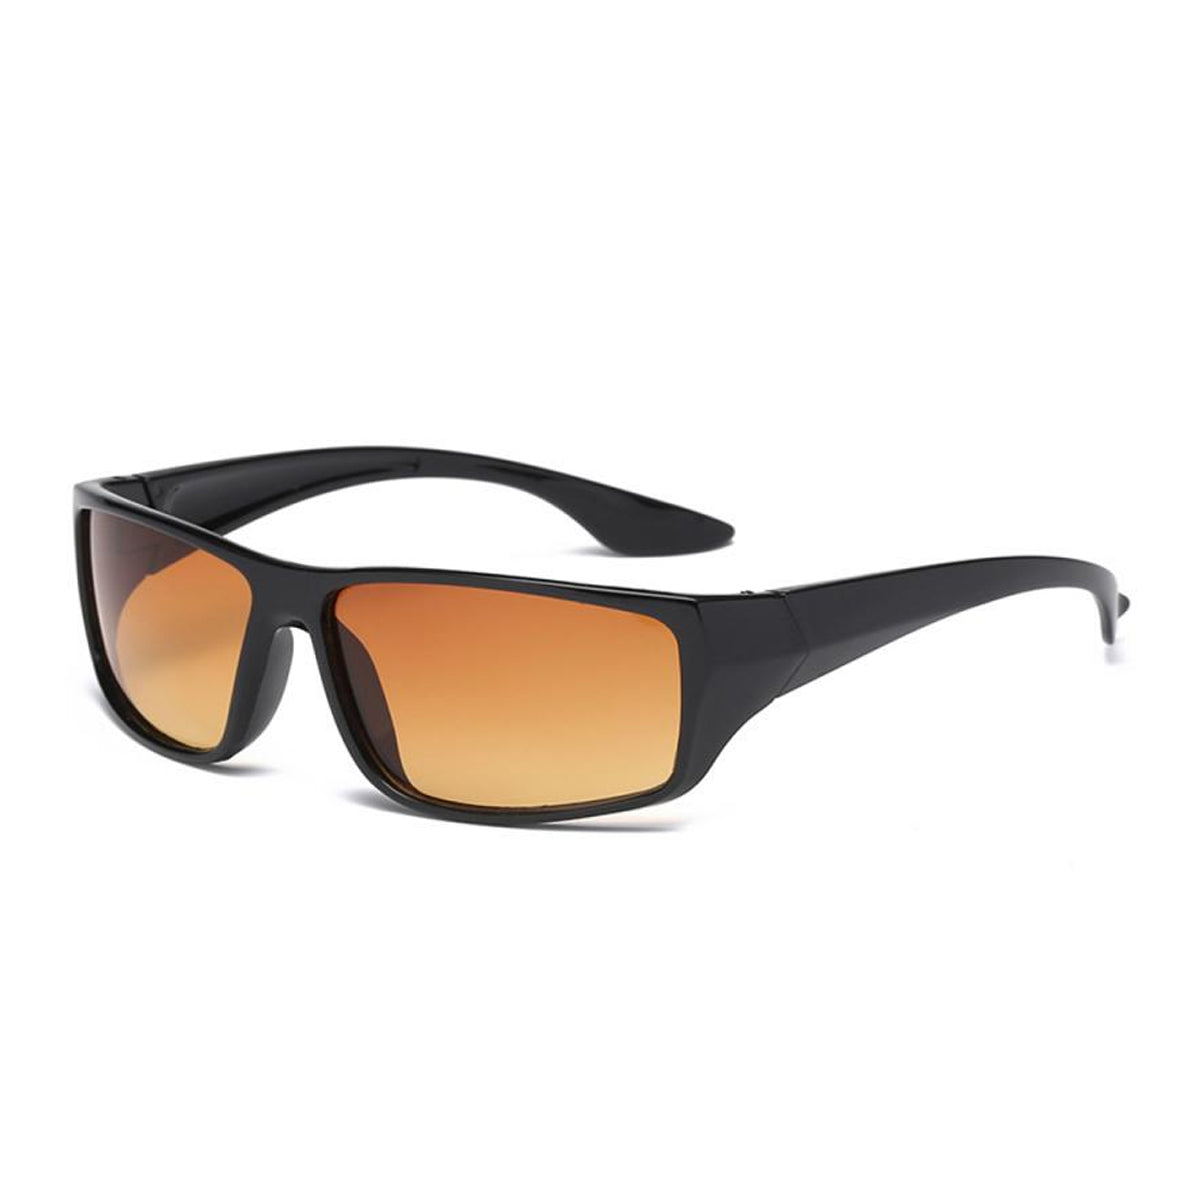 HD Vision Sunglasses - Black Frame/Yellow Lens